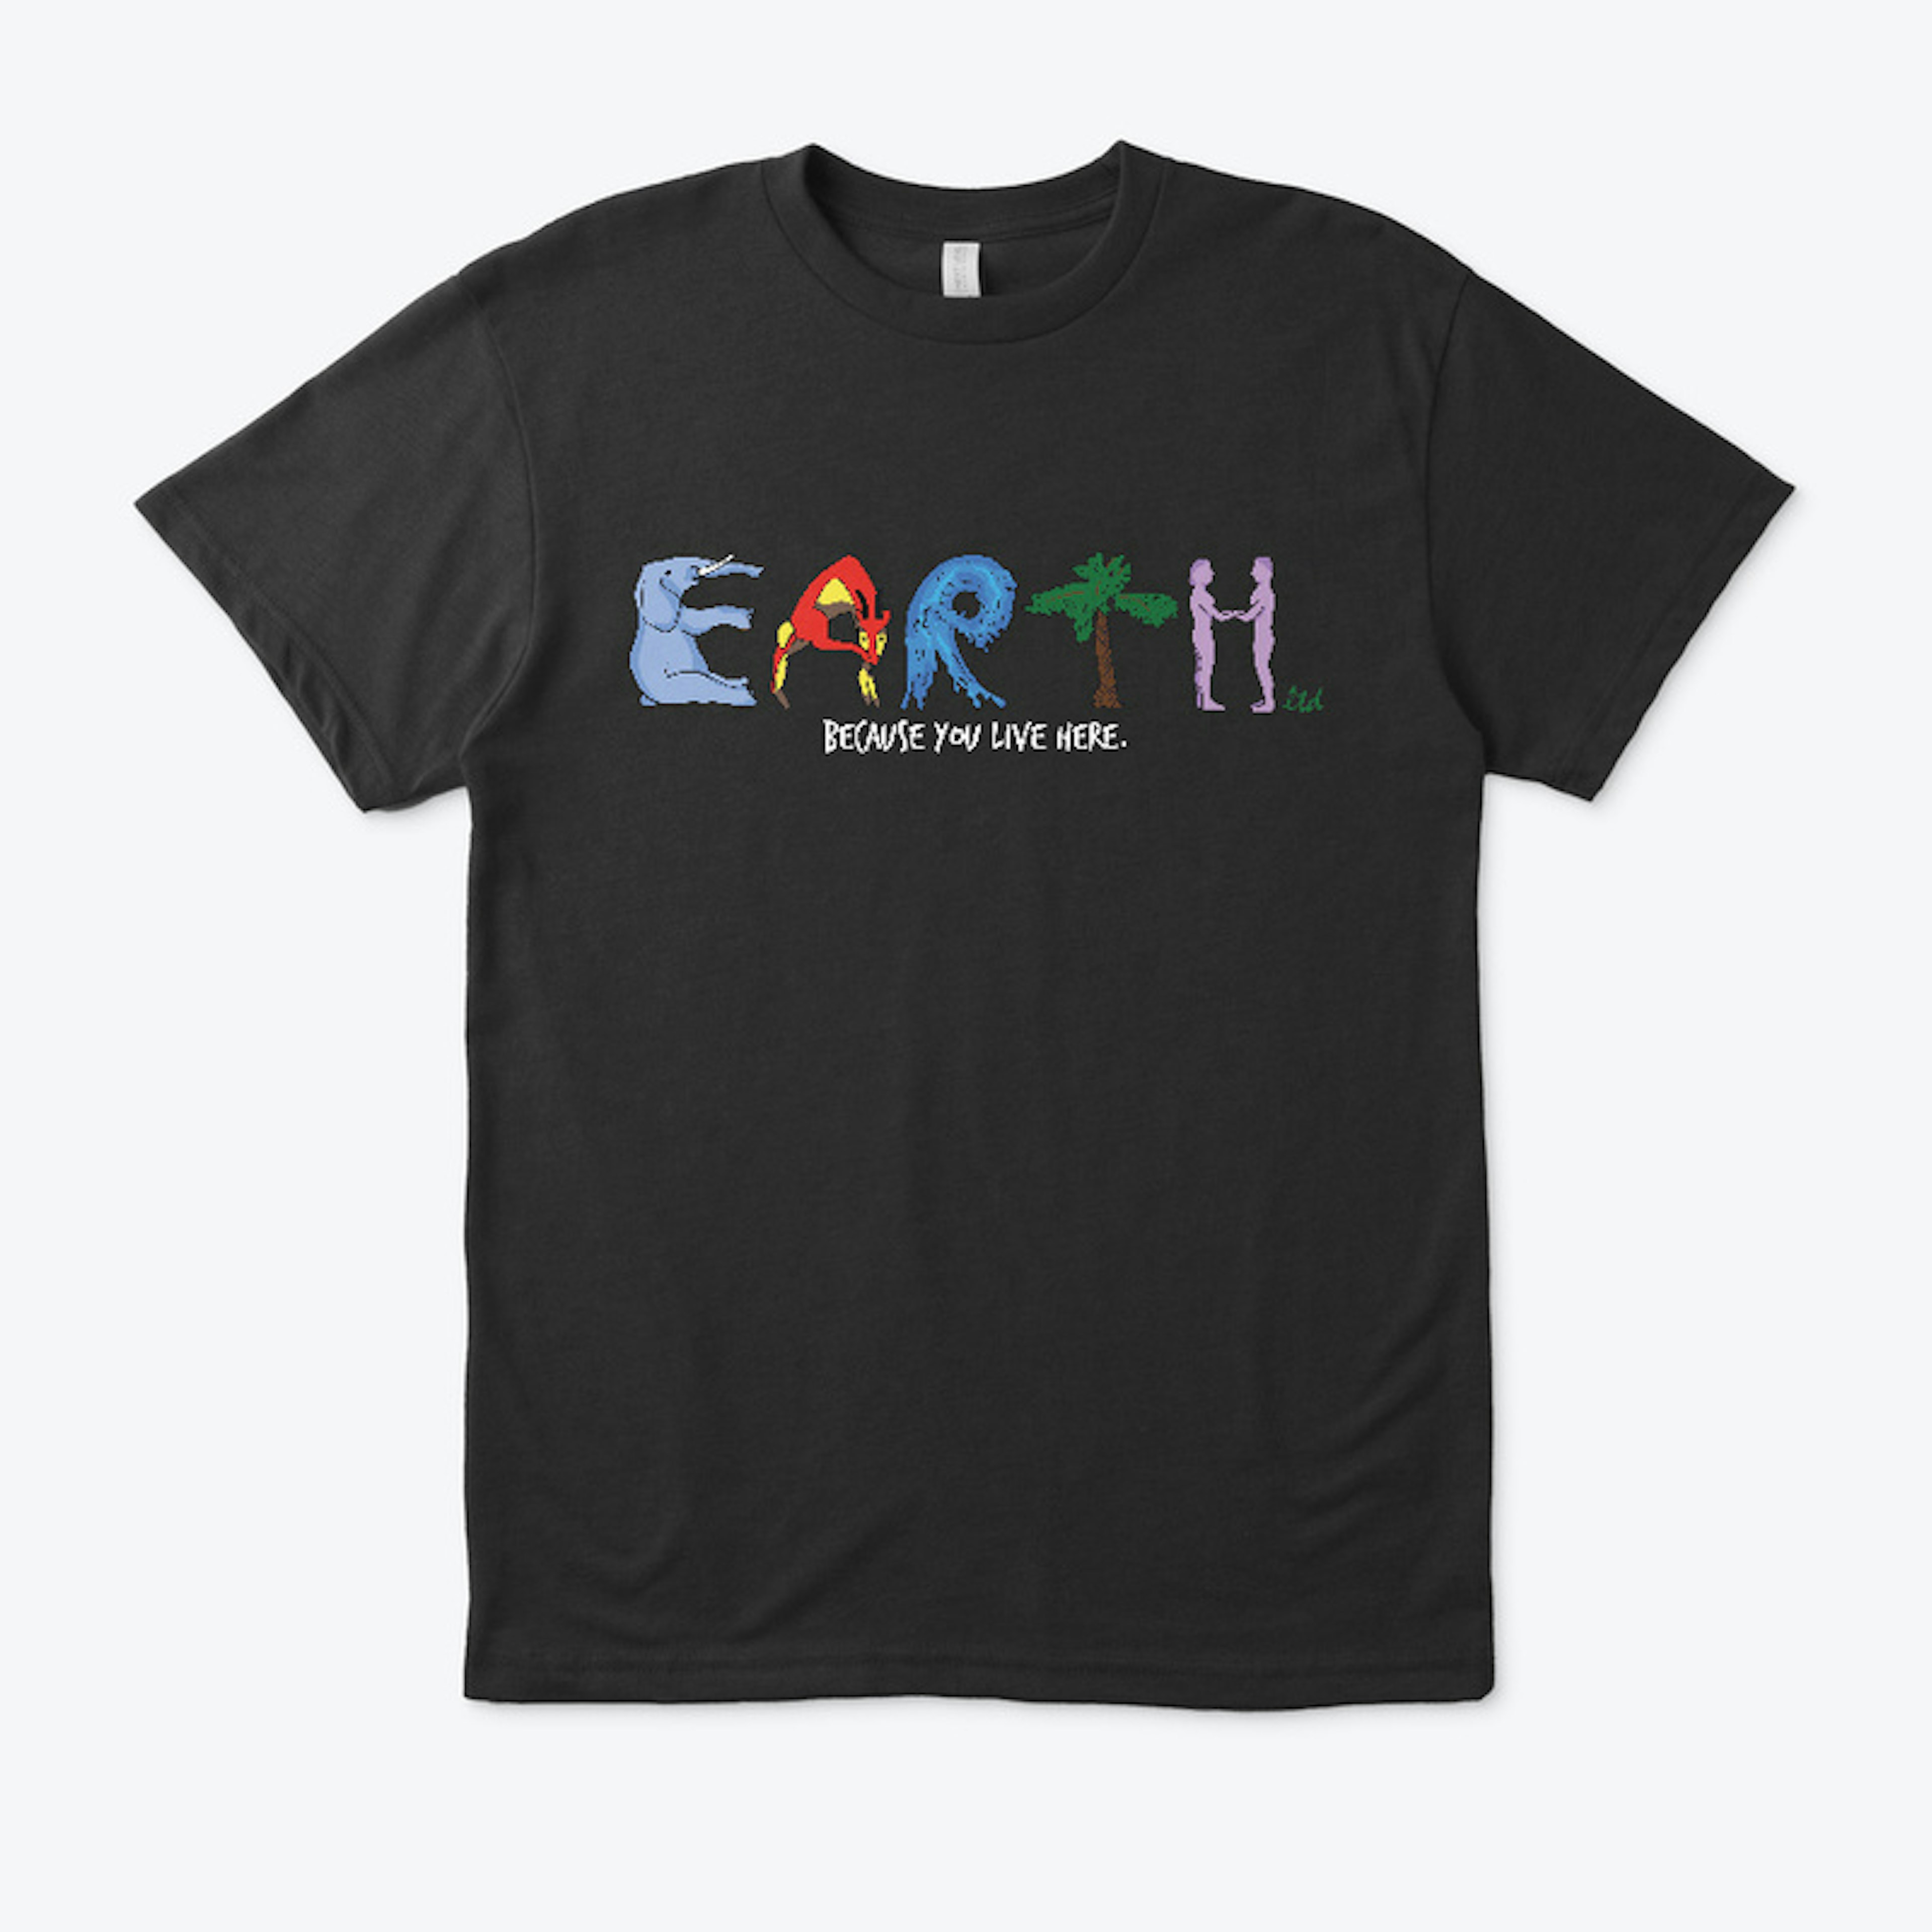 EARTH Logo